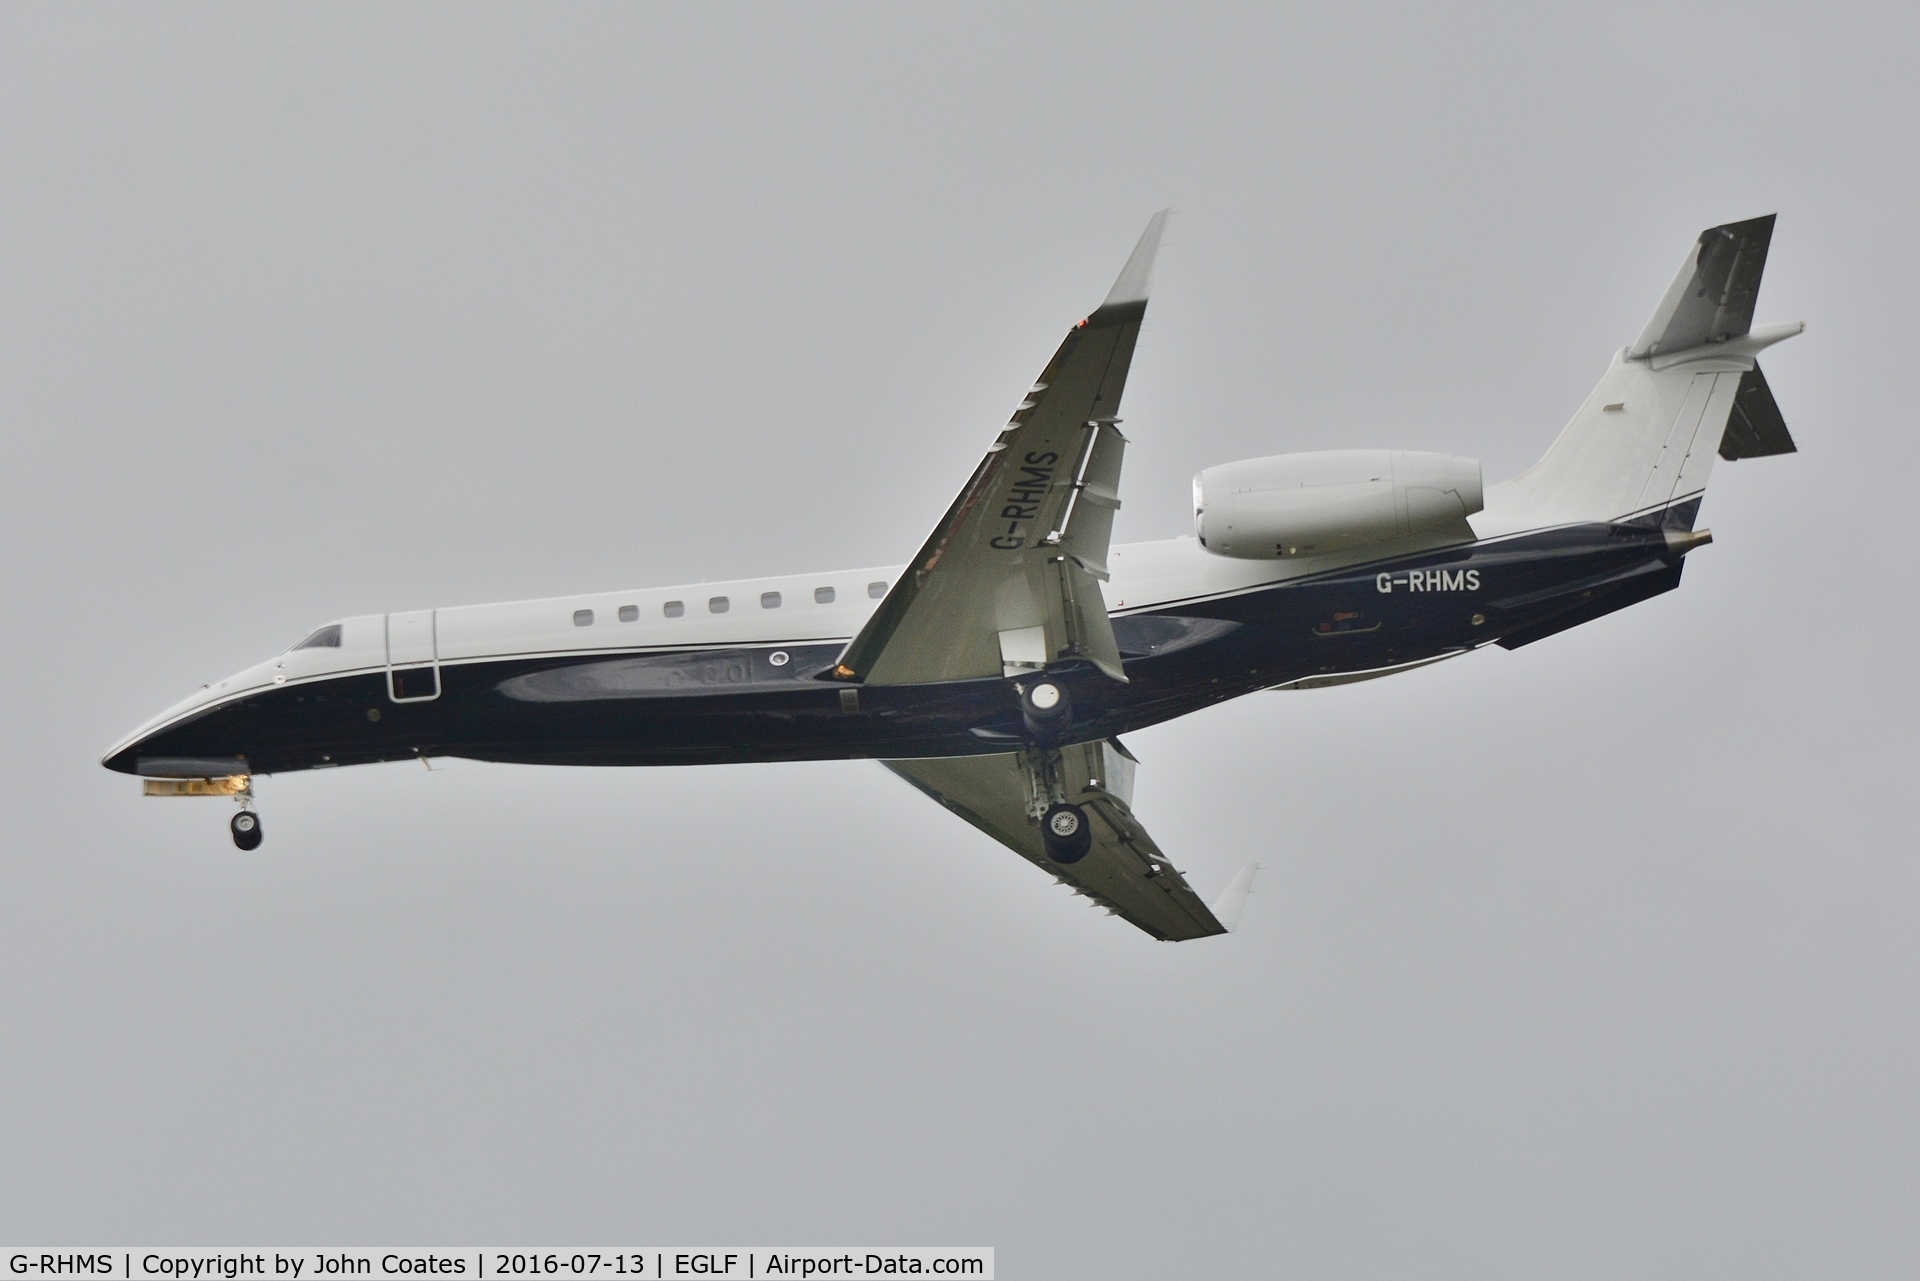 G-RHMS, 2008 Embraer EMB-135BJ Legacy C/N 14501072, Finals to 24 across King George V fields